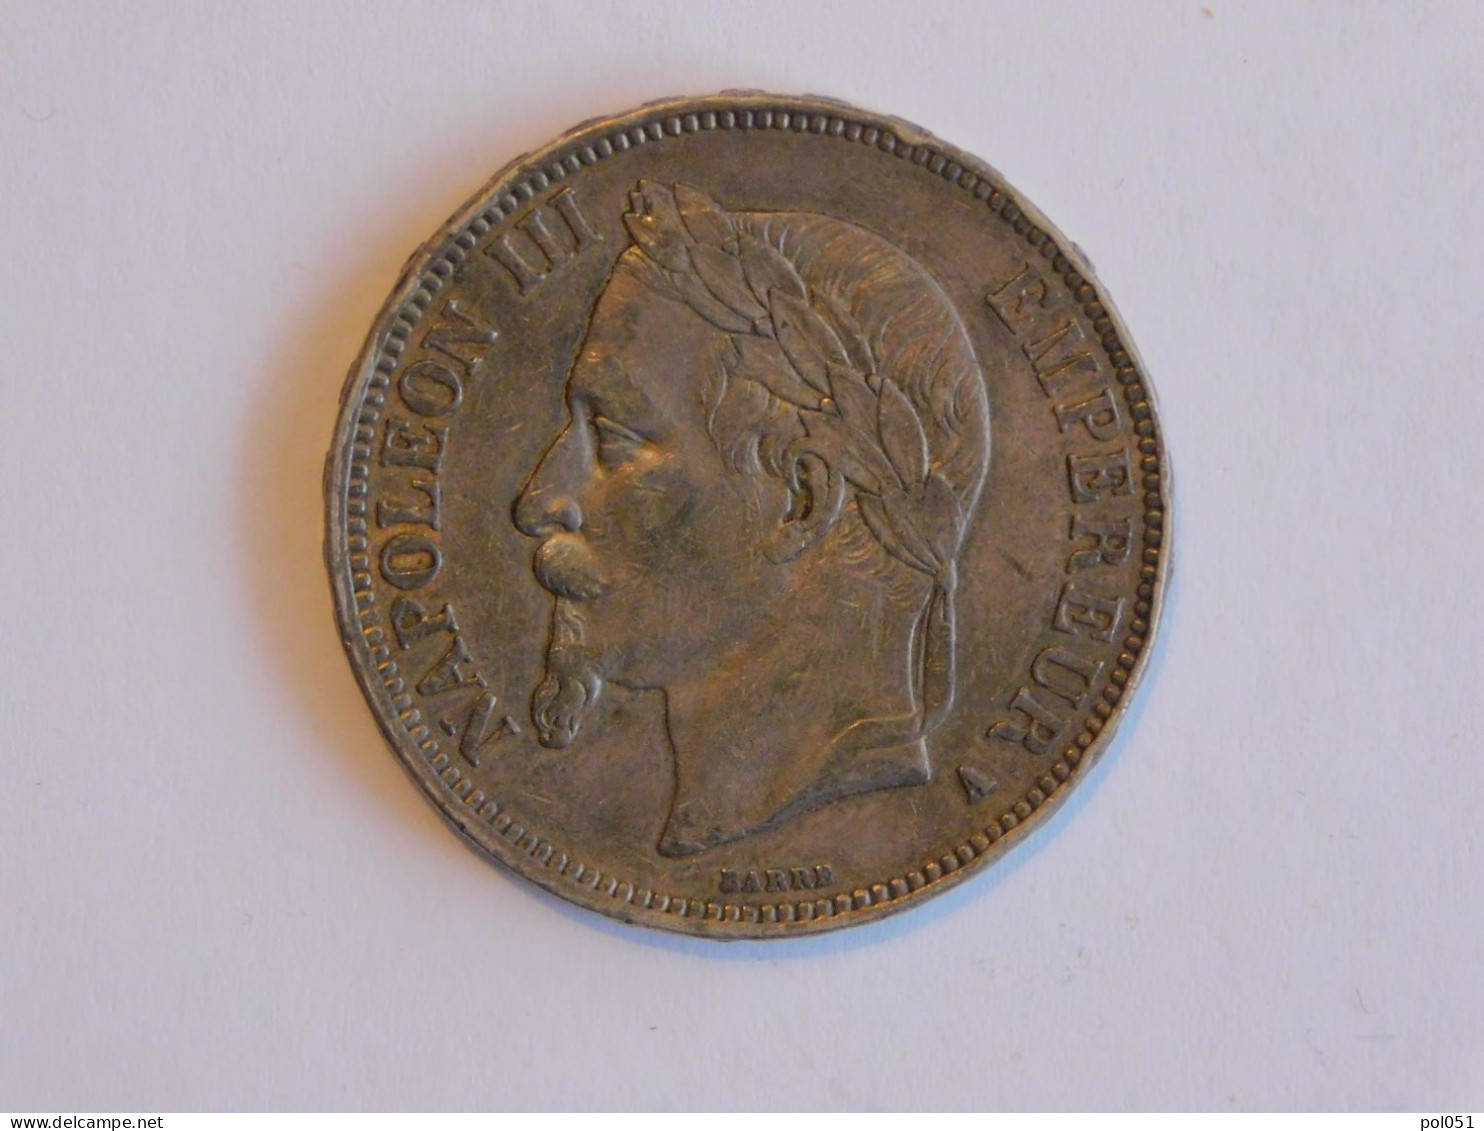 FRANCE 5 Francs 1867 A - Silver, Argent Franc - 5 Francs